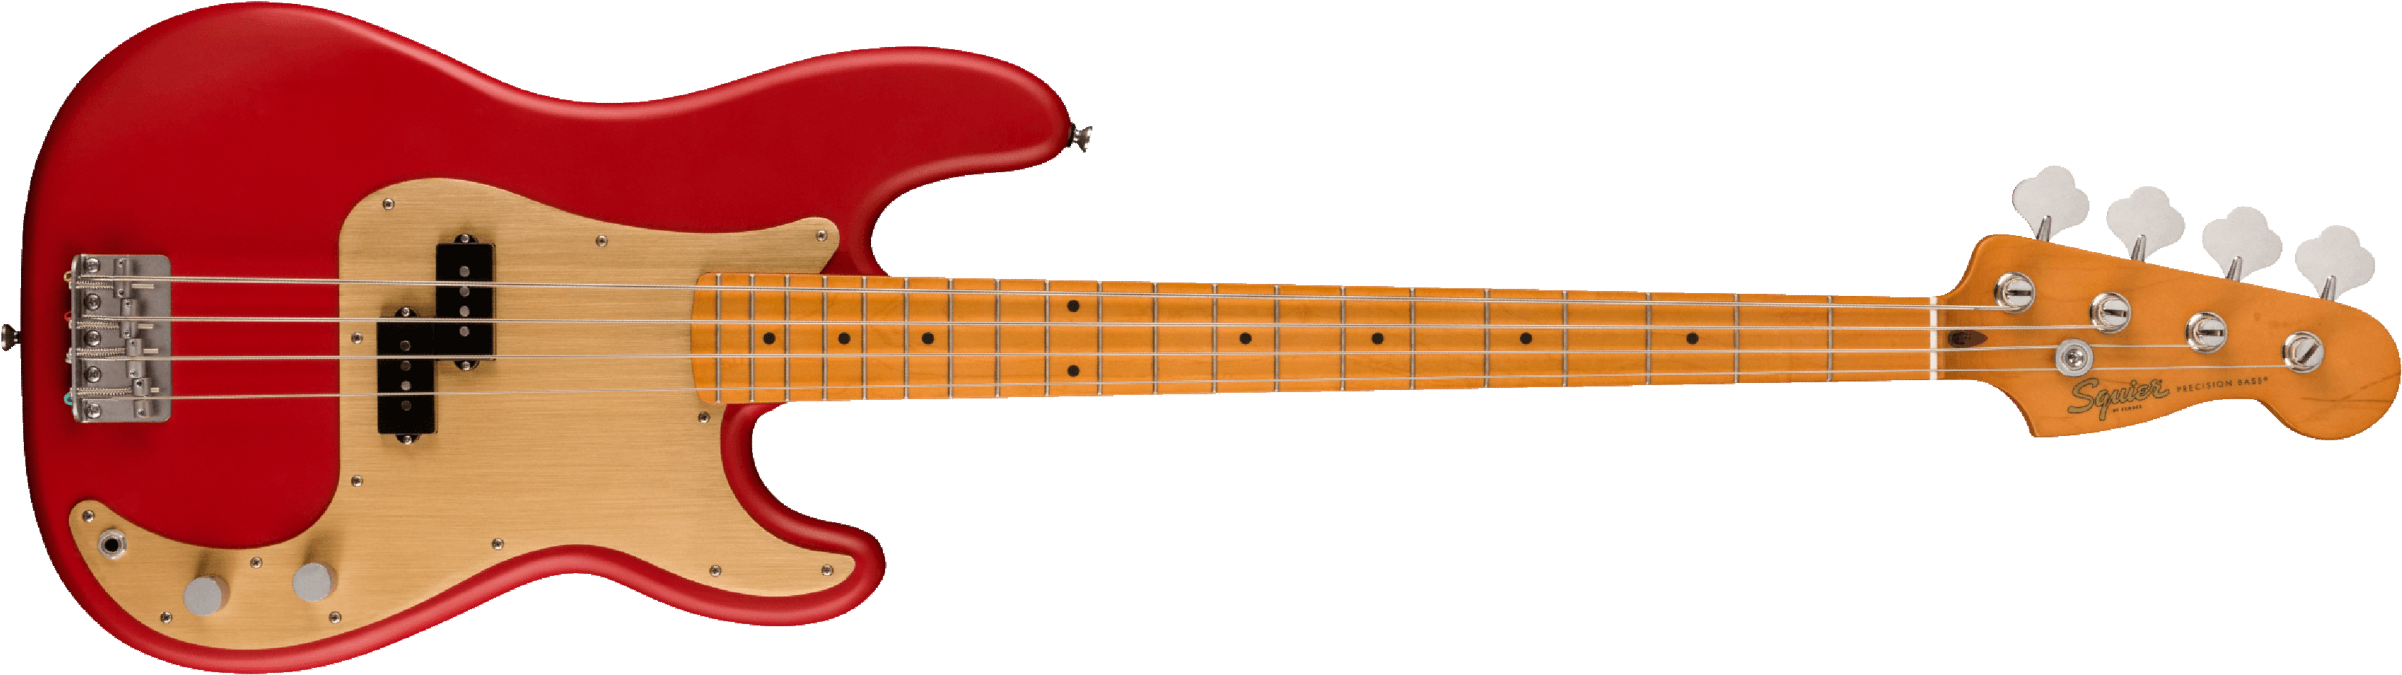 Squier Precision Bass 40th Anniversary Gold Edition Mn - Satin Dakota Red - Bajo eléctrico de cuerpo sólido - Main picture